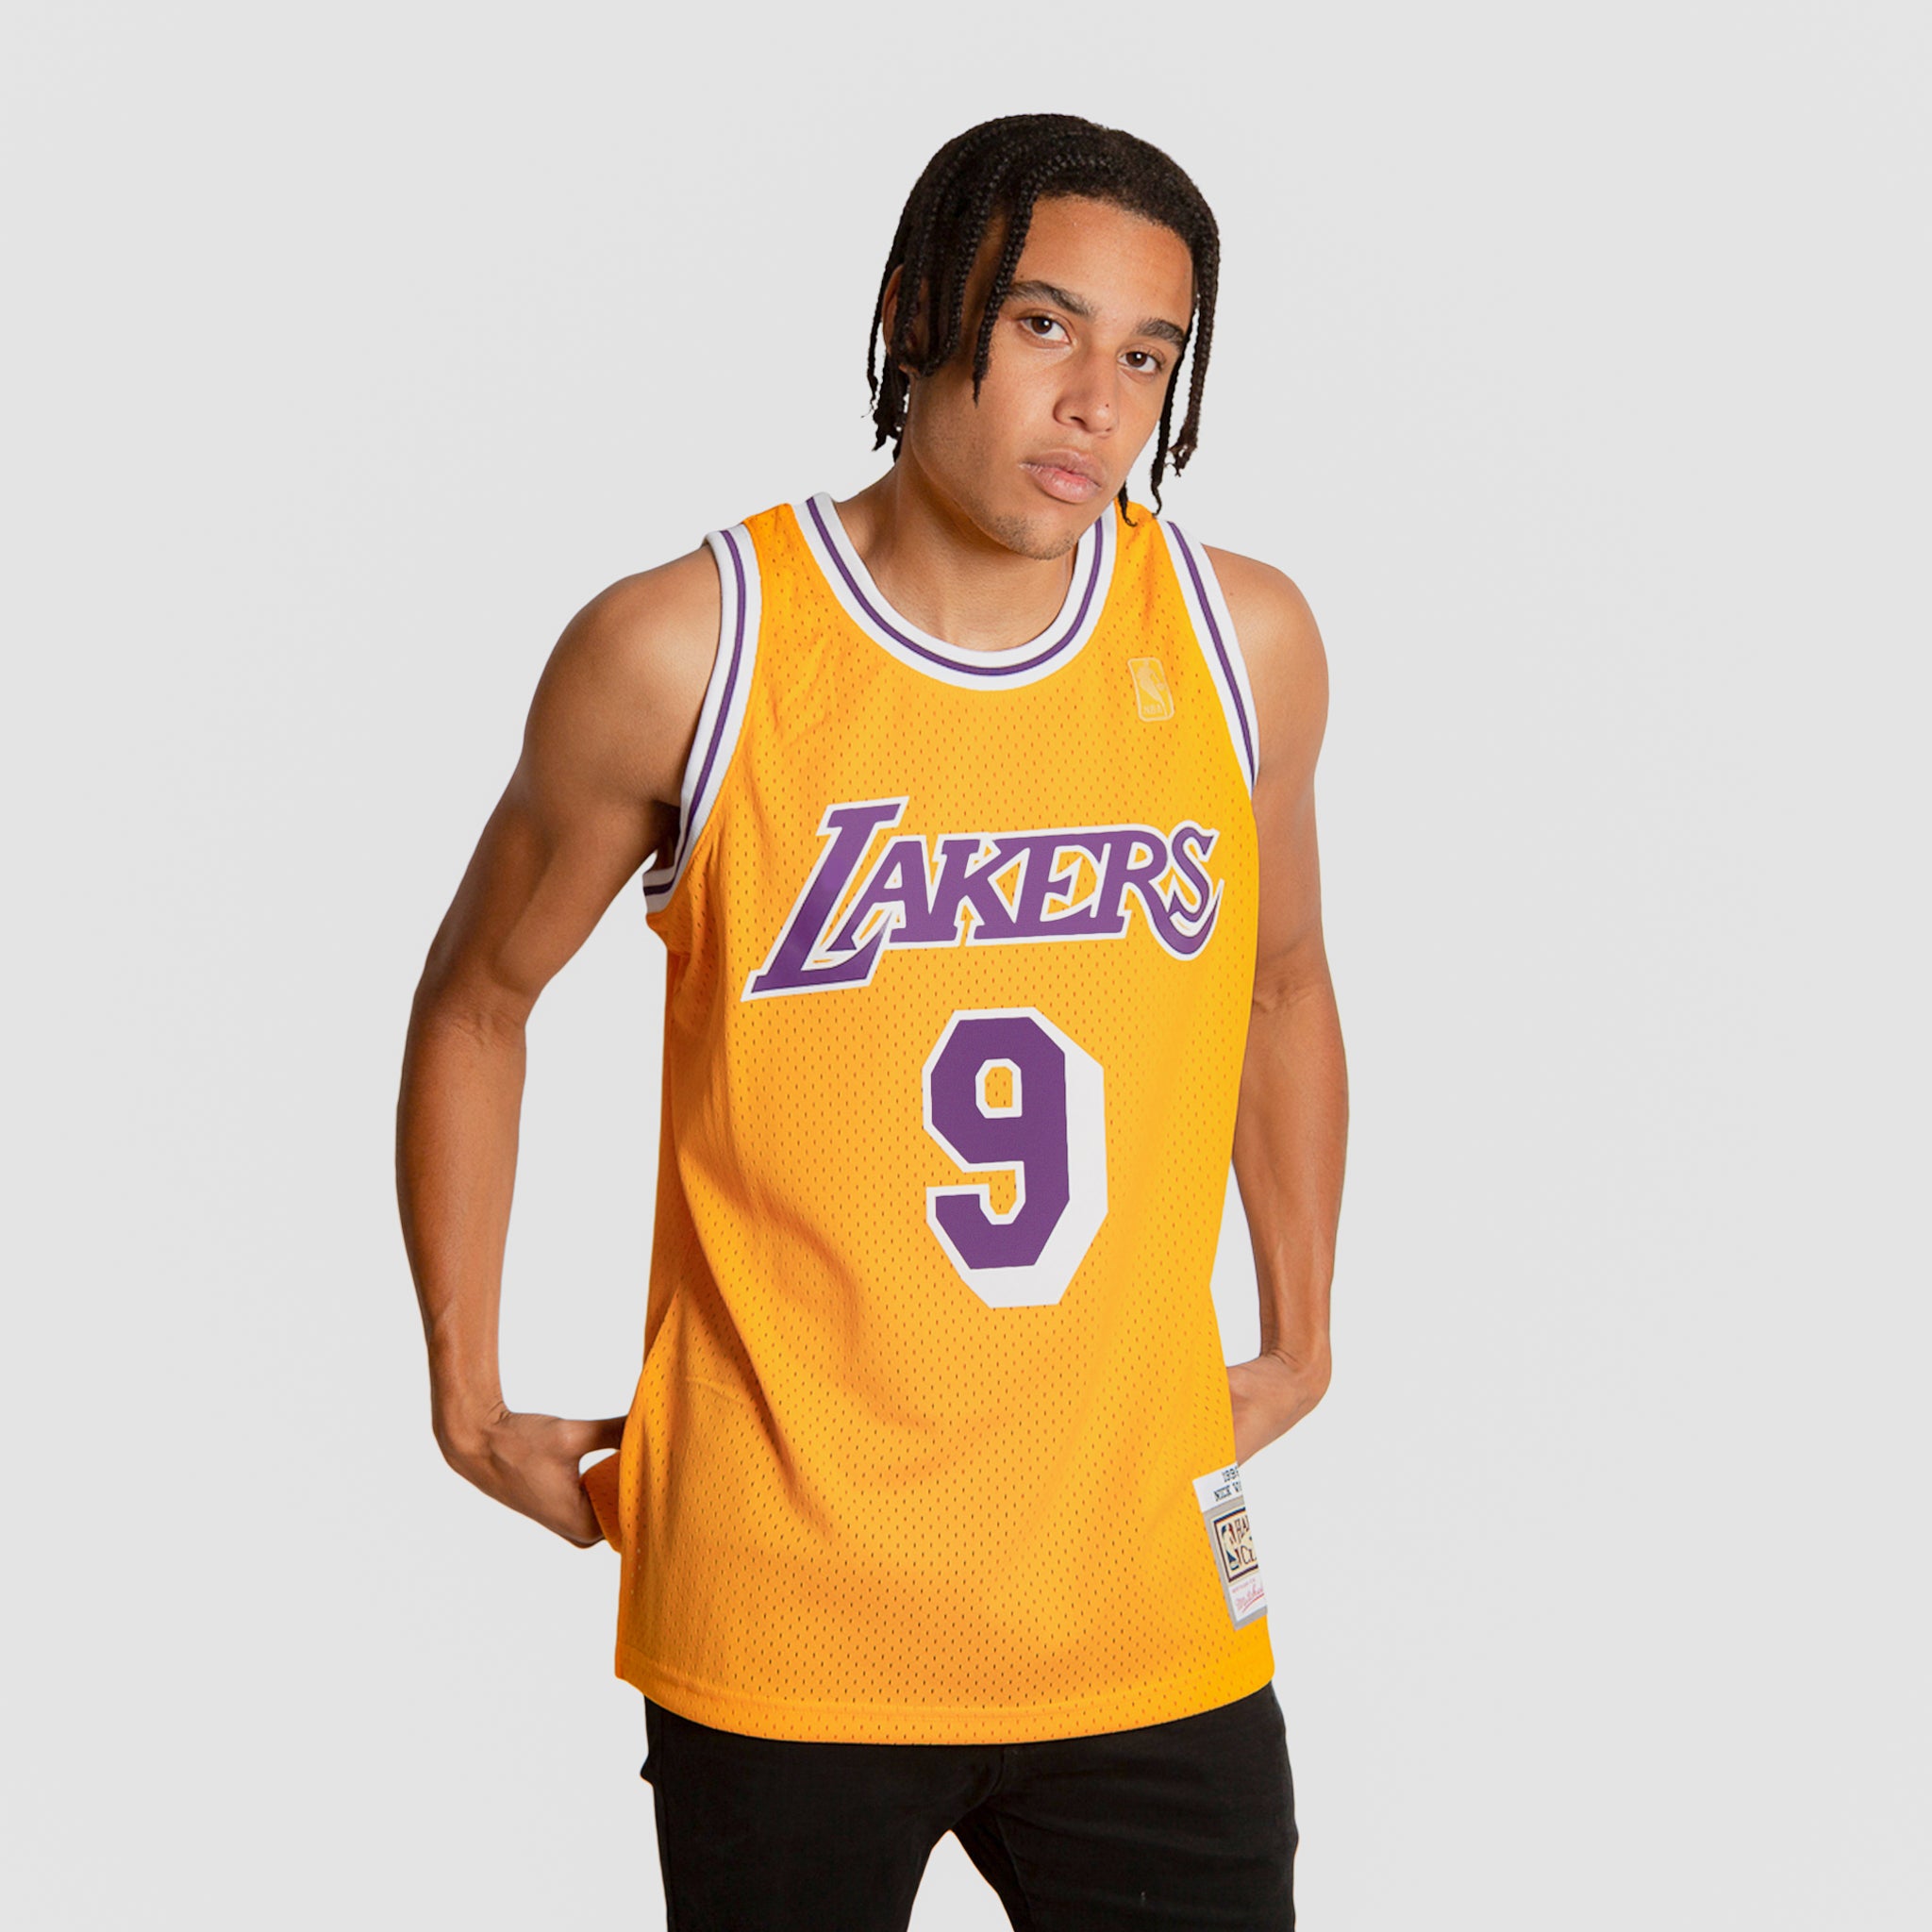 New Mitchell & Ness Los Angeles Lakers Nick Van Exel Swingman Jersey  Size Medium